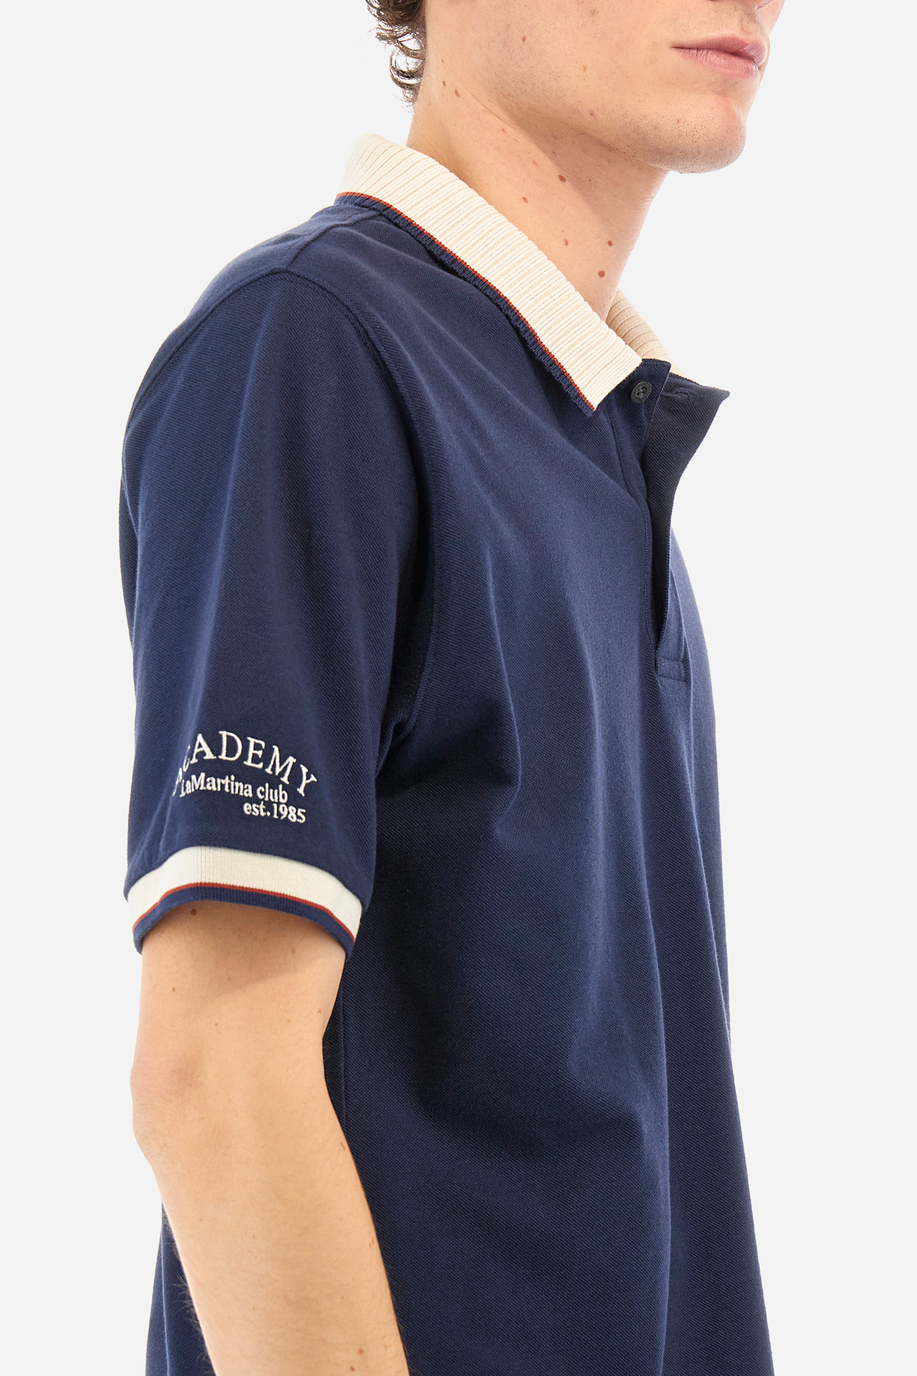 Men's regular fit polo shirt - Yantsey - Polo Shirts | La Martina - Official Online Shop